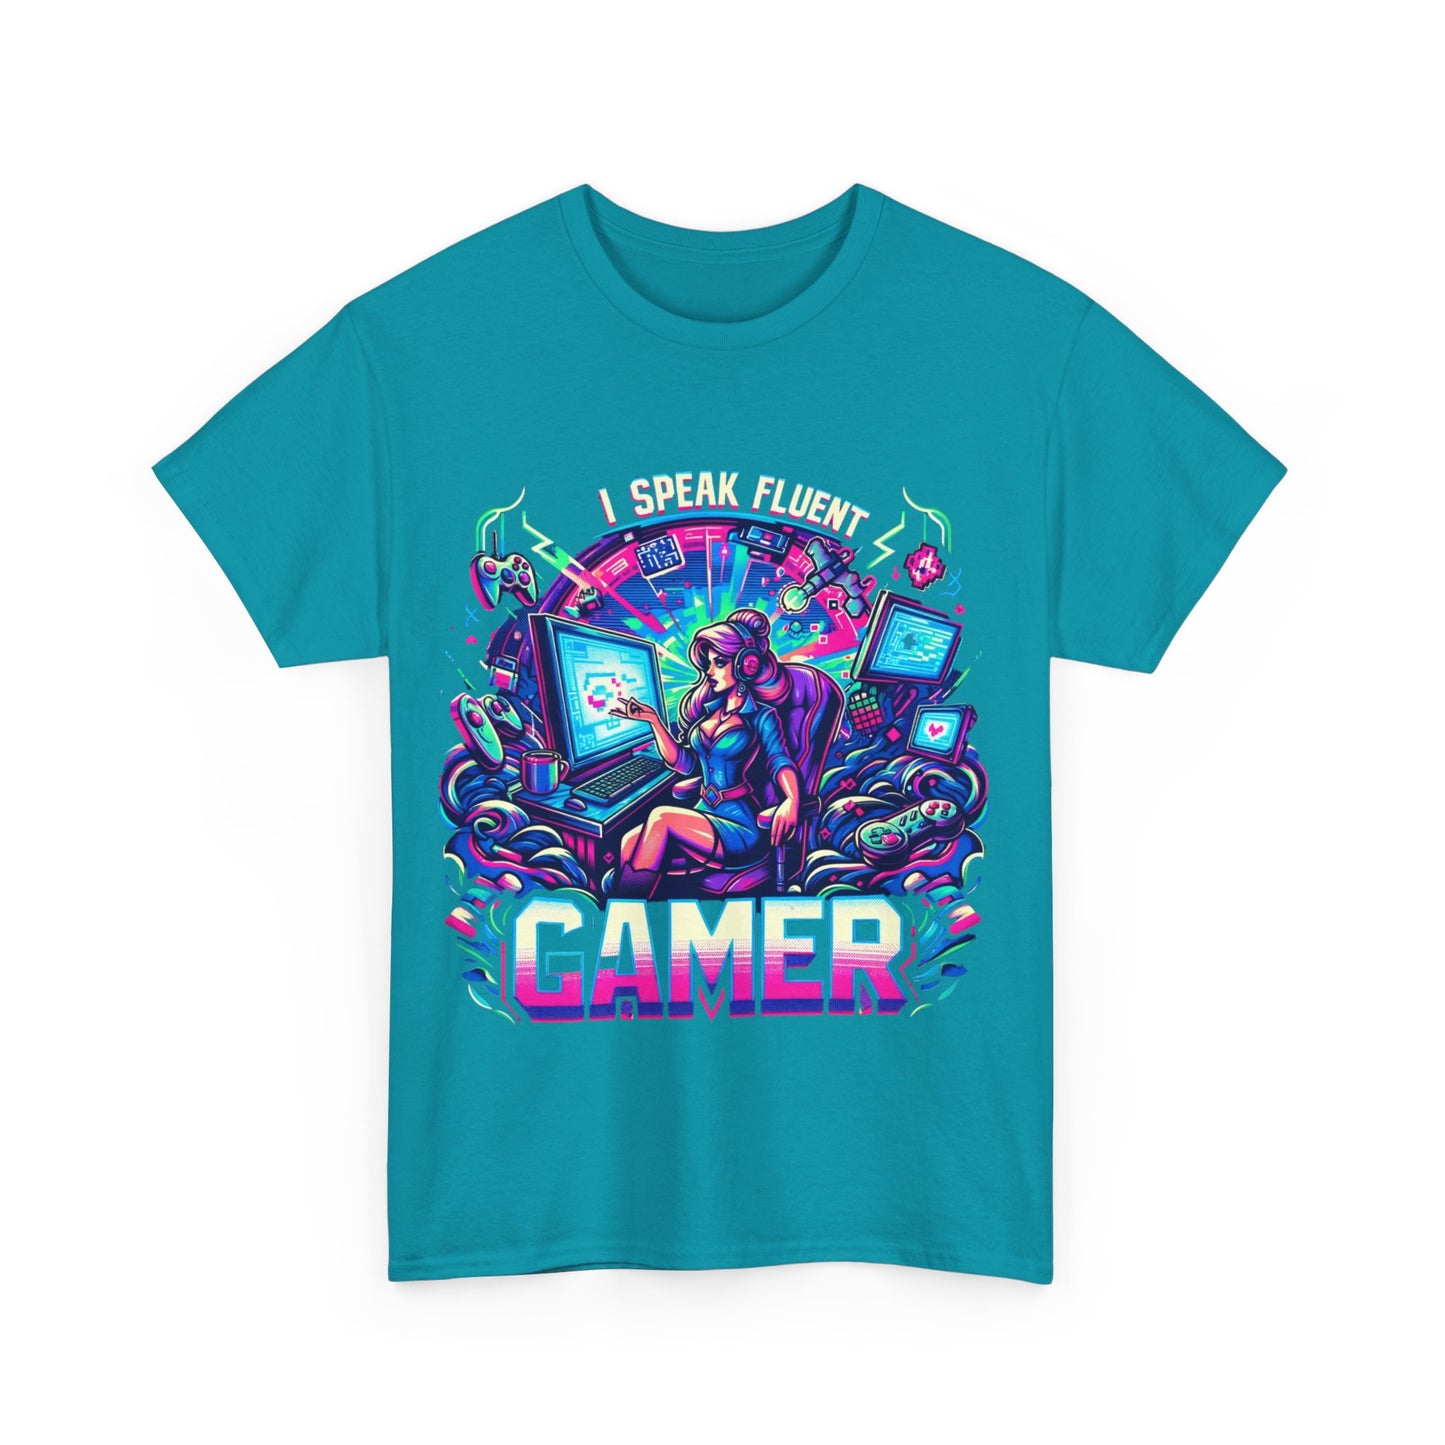 Y.M.L.Y. "I Speak Fluent Gamer" T-Shirt Gamer T-Shirt Game Streamer T-Shirt